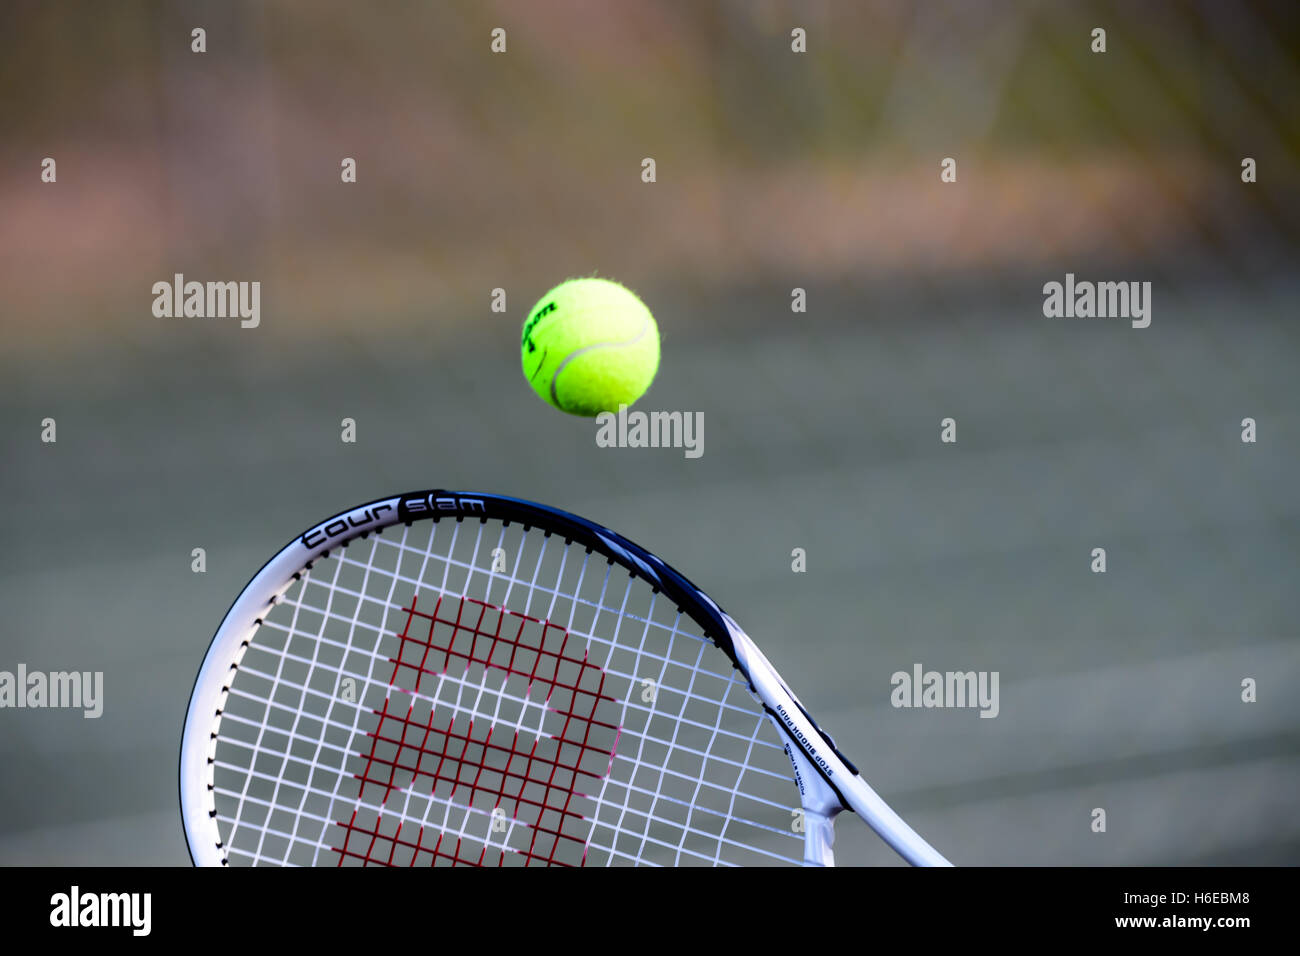 Tennis ball hitting a racket Stock Photo